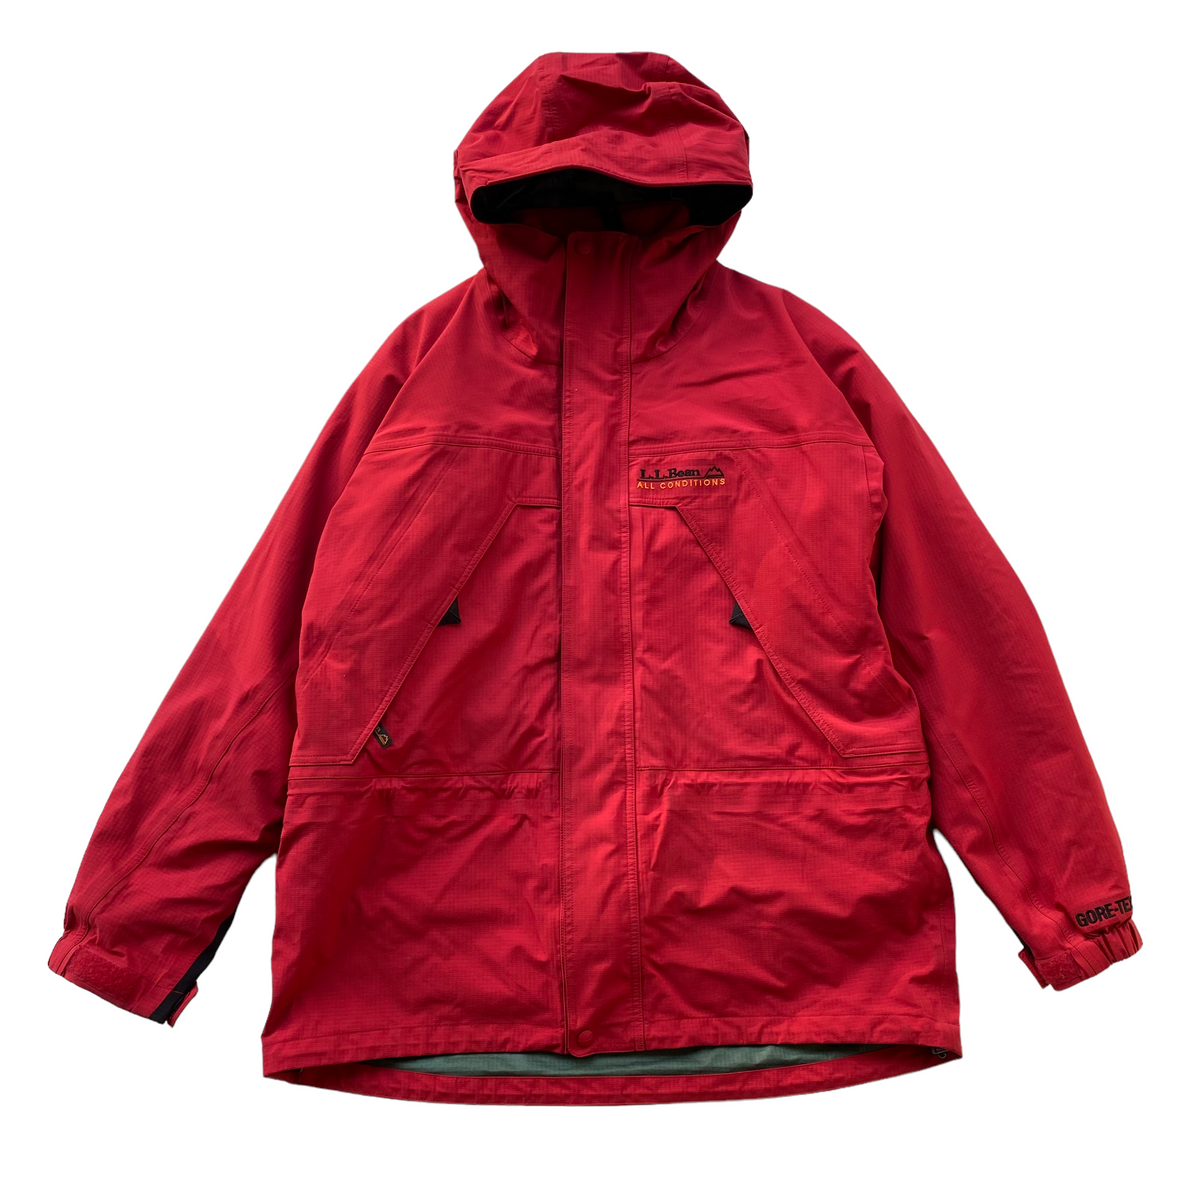 1998 LL Bean Goretex jacket and fleece large – Vintage Sponsor